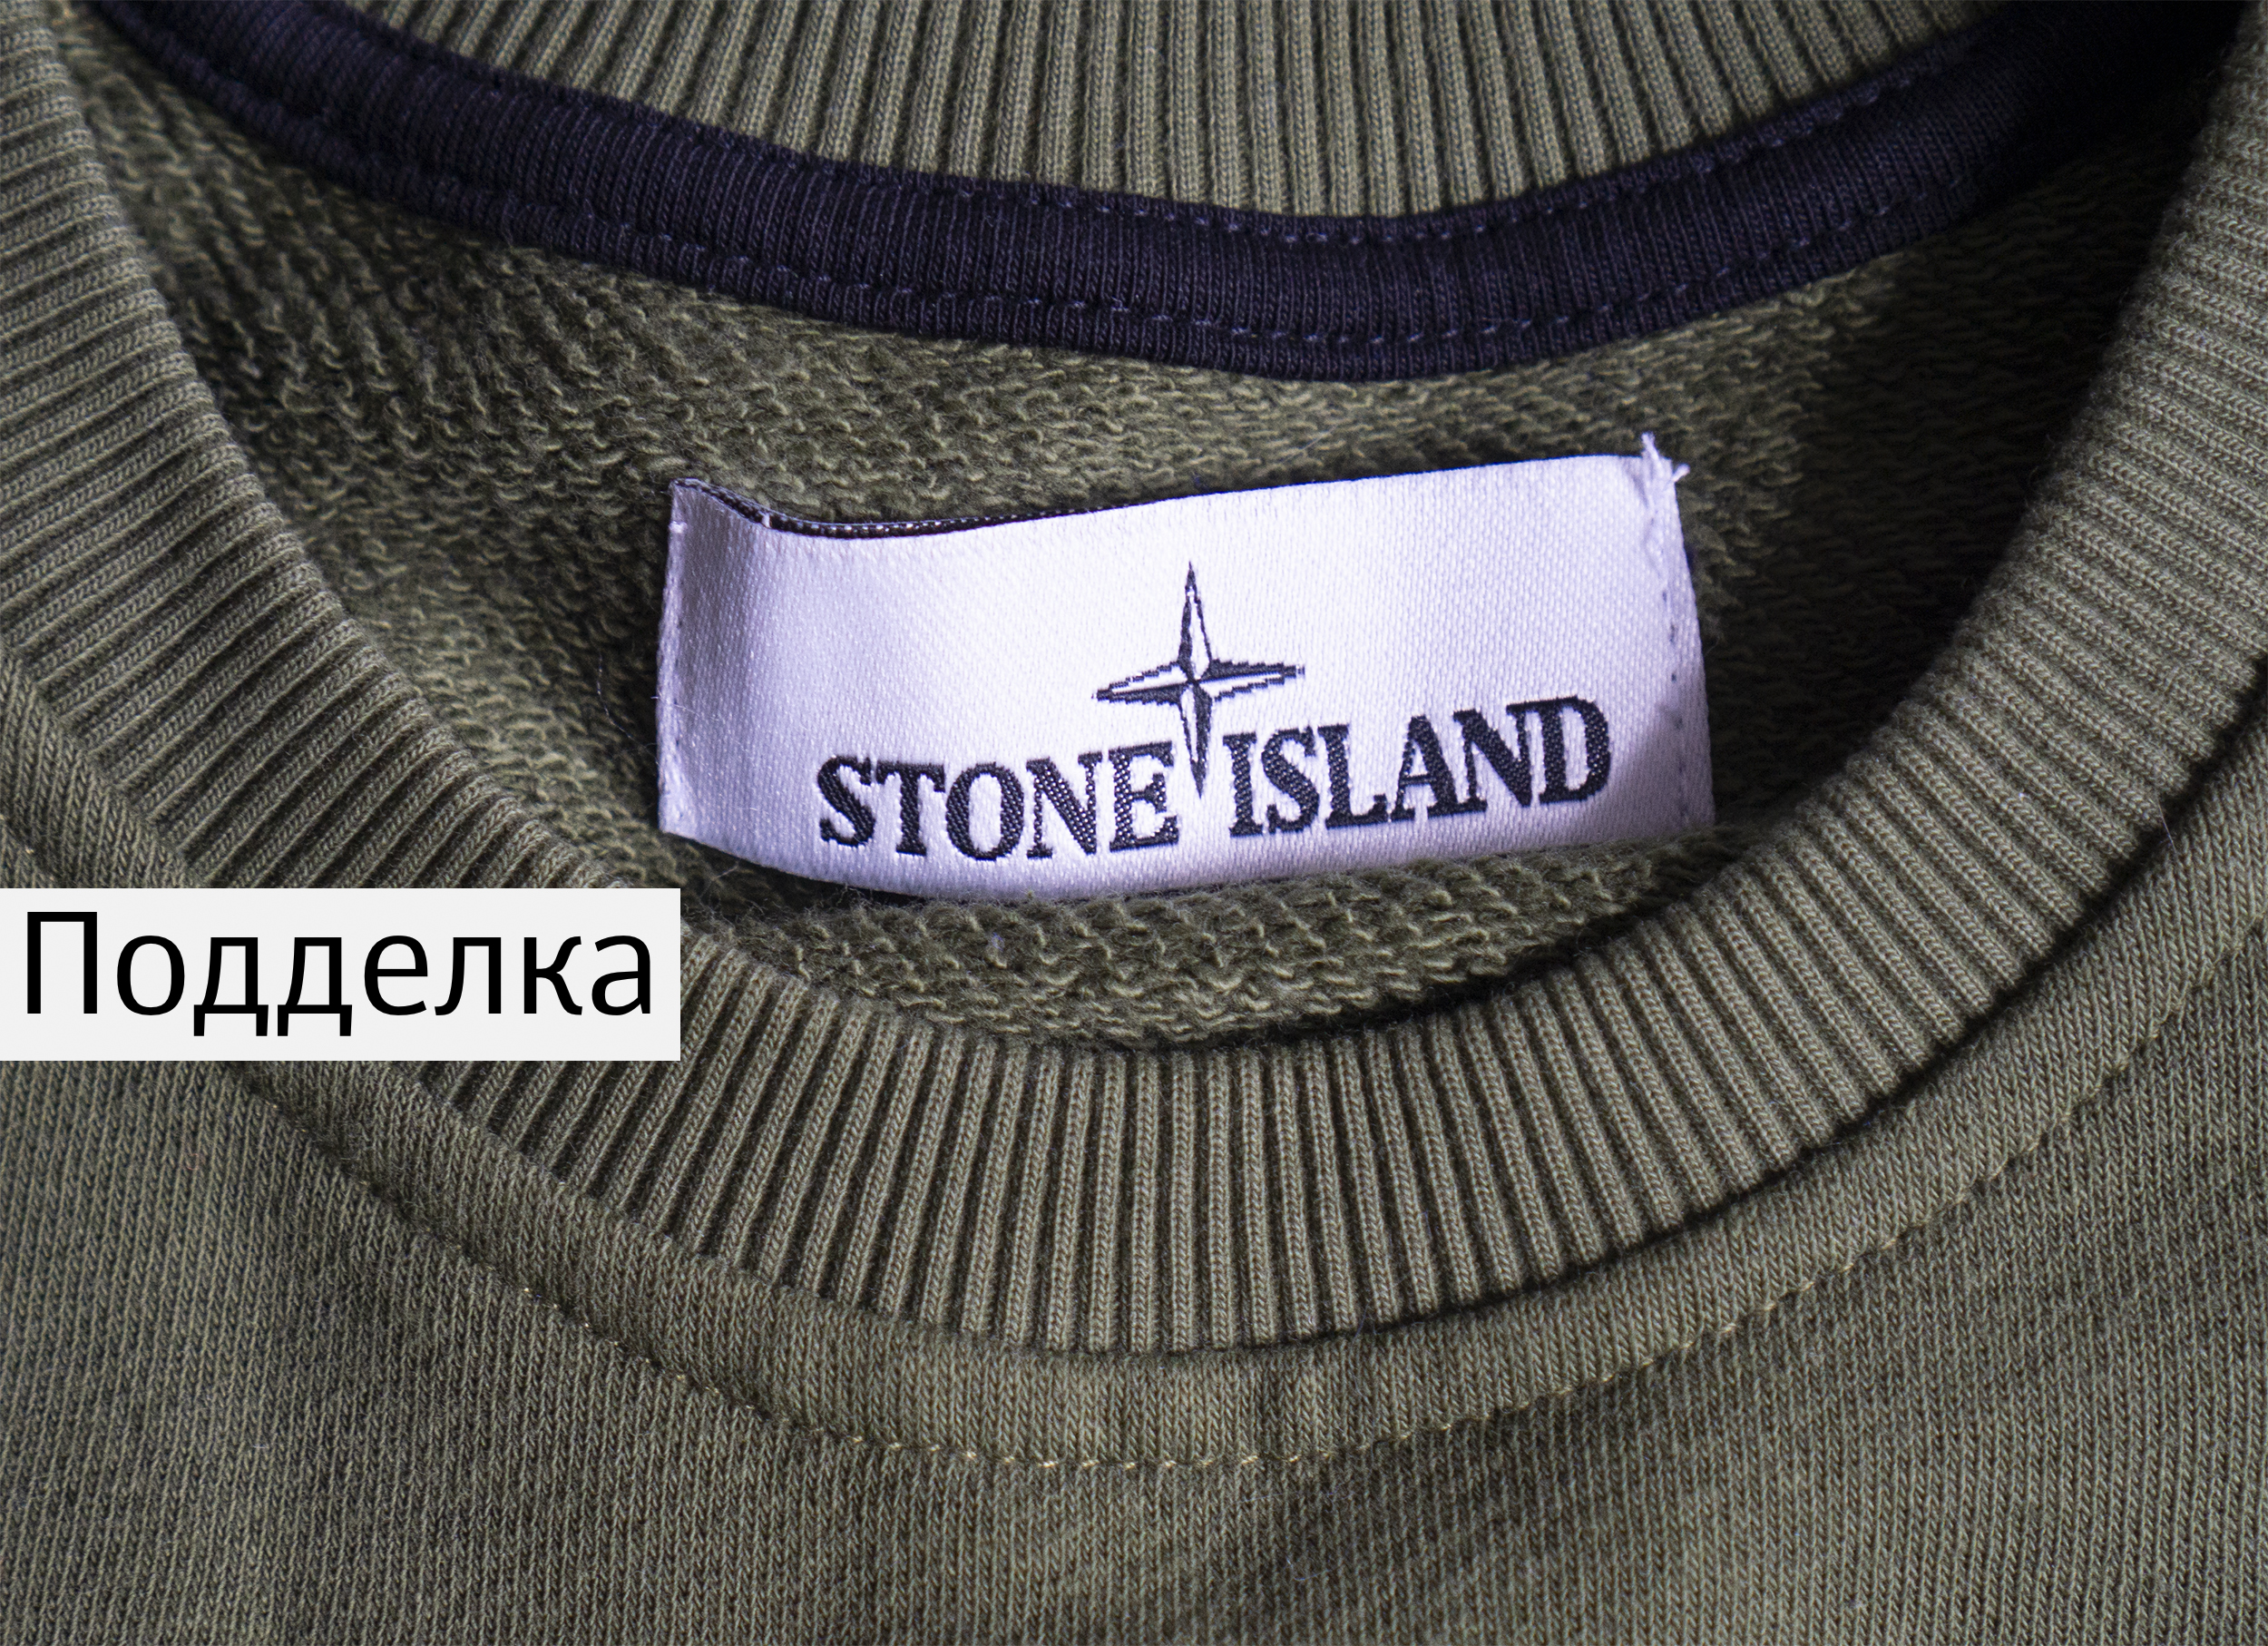 Stone Island 1959743 бирка